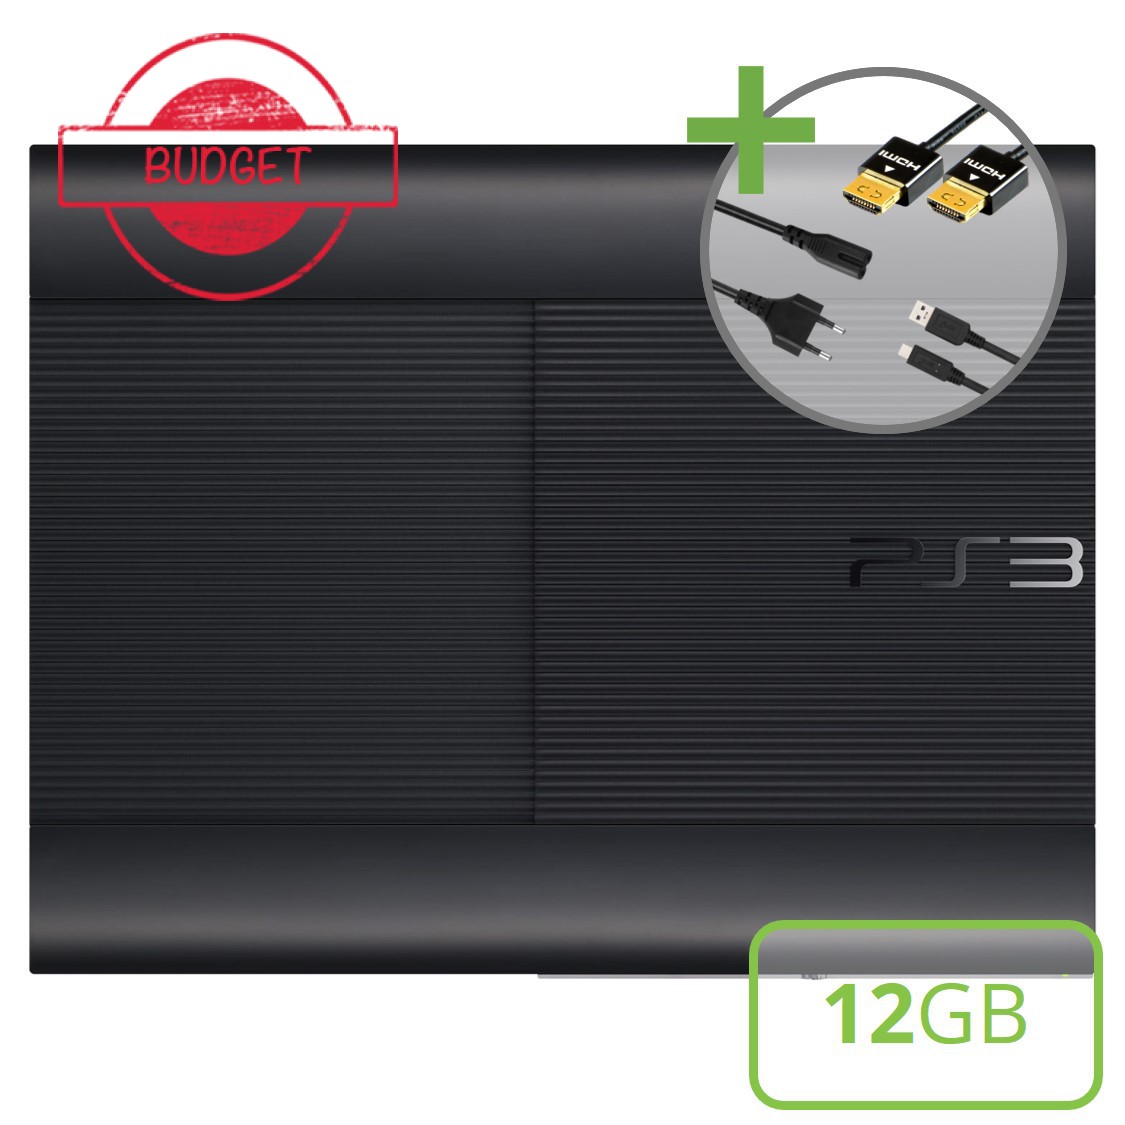 Sony PlayStation 3 Super Slim (12GB) Starter Pack - DualShock Edition - Budget - Playstation 3 Hardware - 3